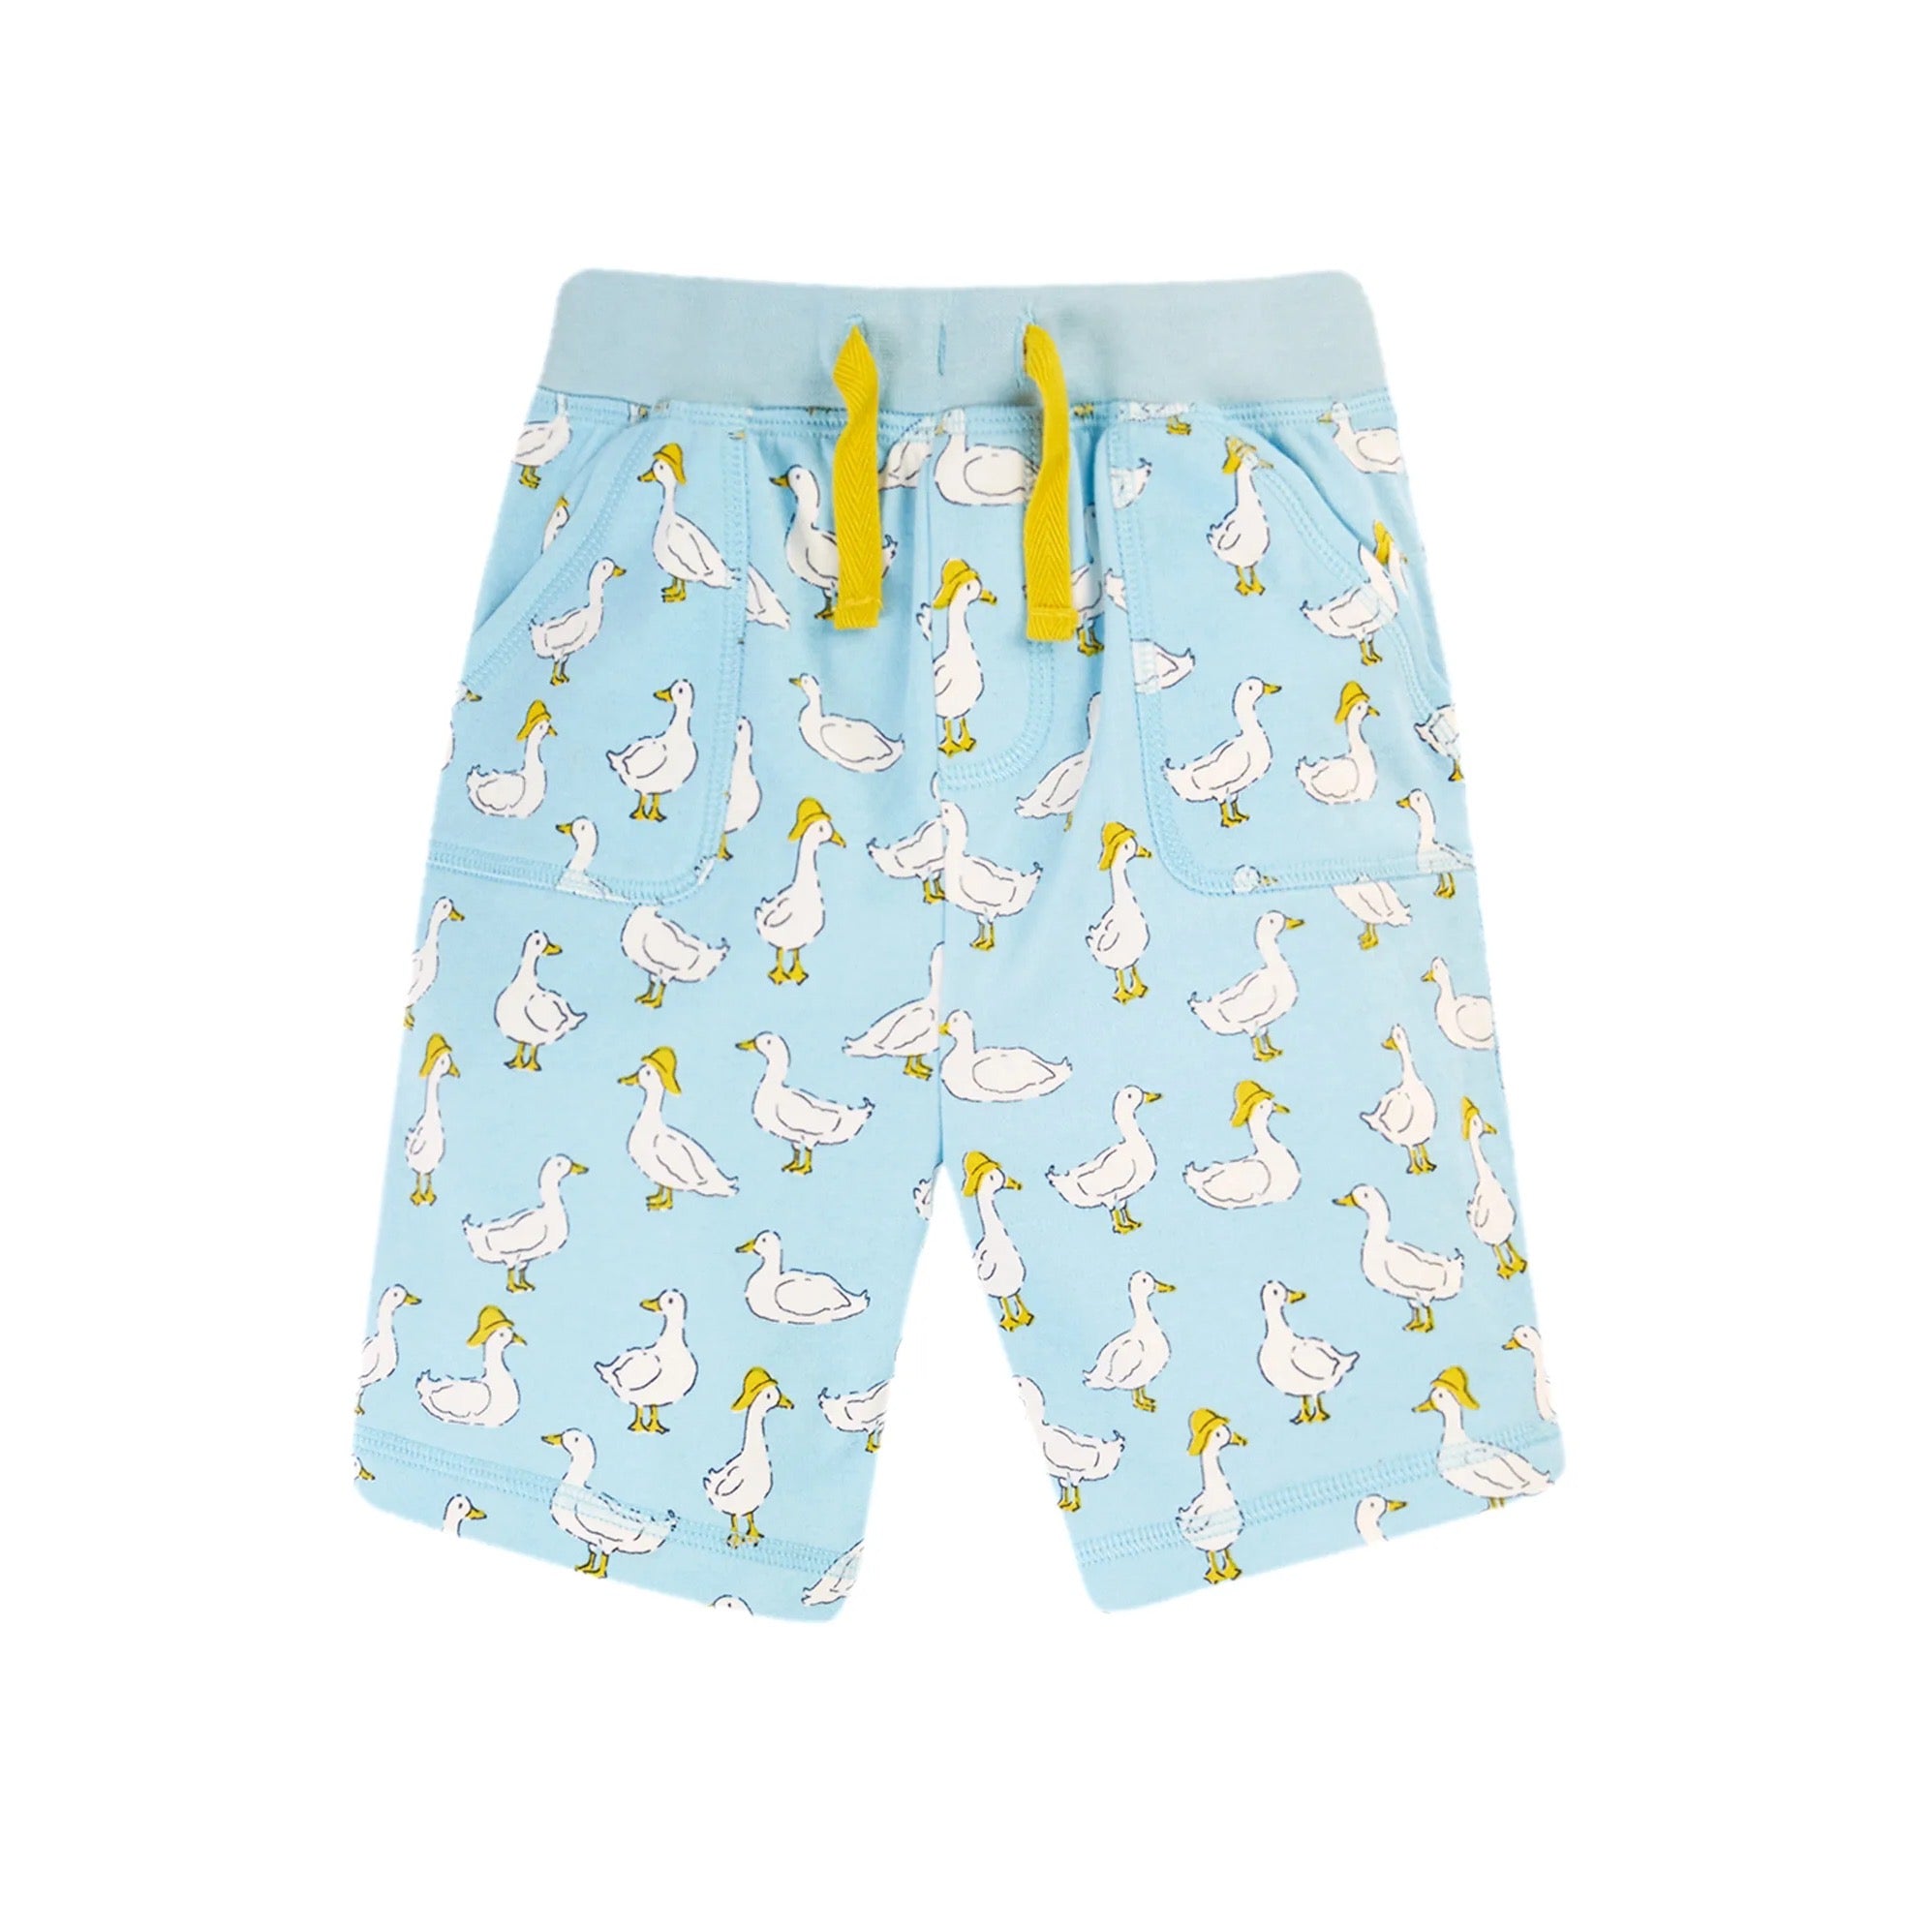 Frugi Aiden Infant Shorts Splish Splash Ducks Clothing 0-3M / Blue,3-6M / Blue,6-9M / Blue,9-12M / Blue,12-18M / Blue,18-24M / Blue